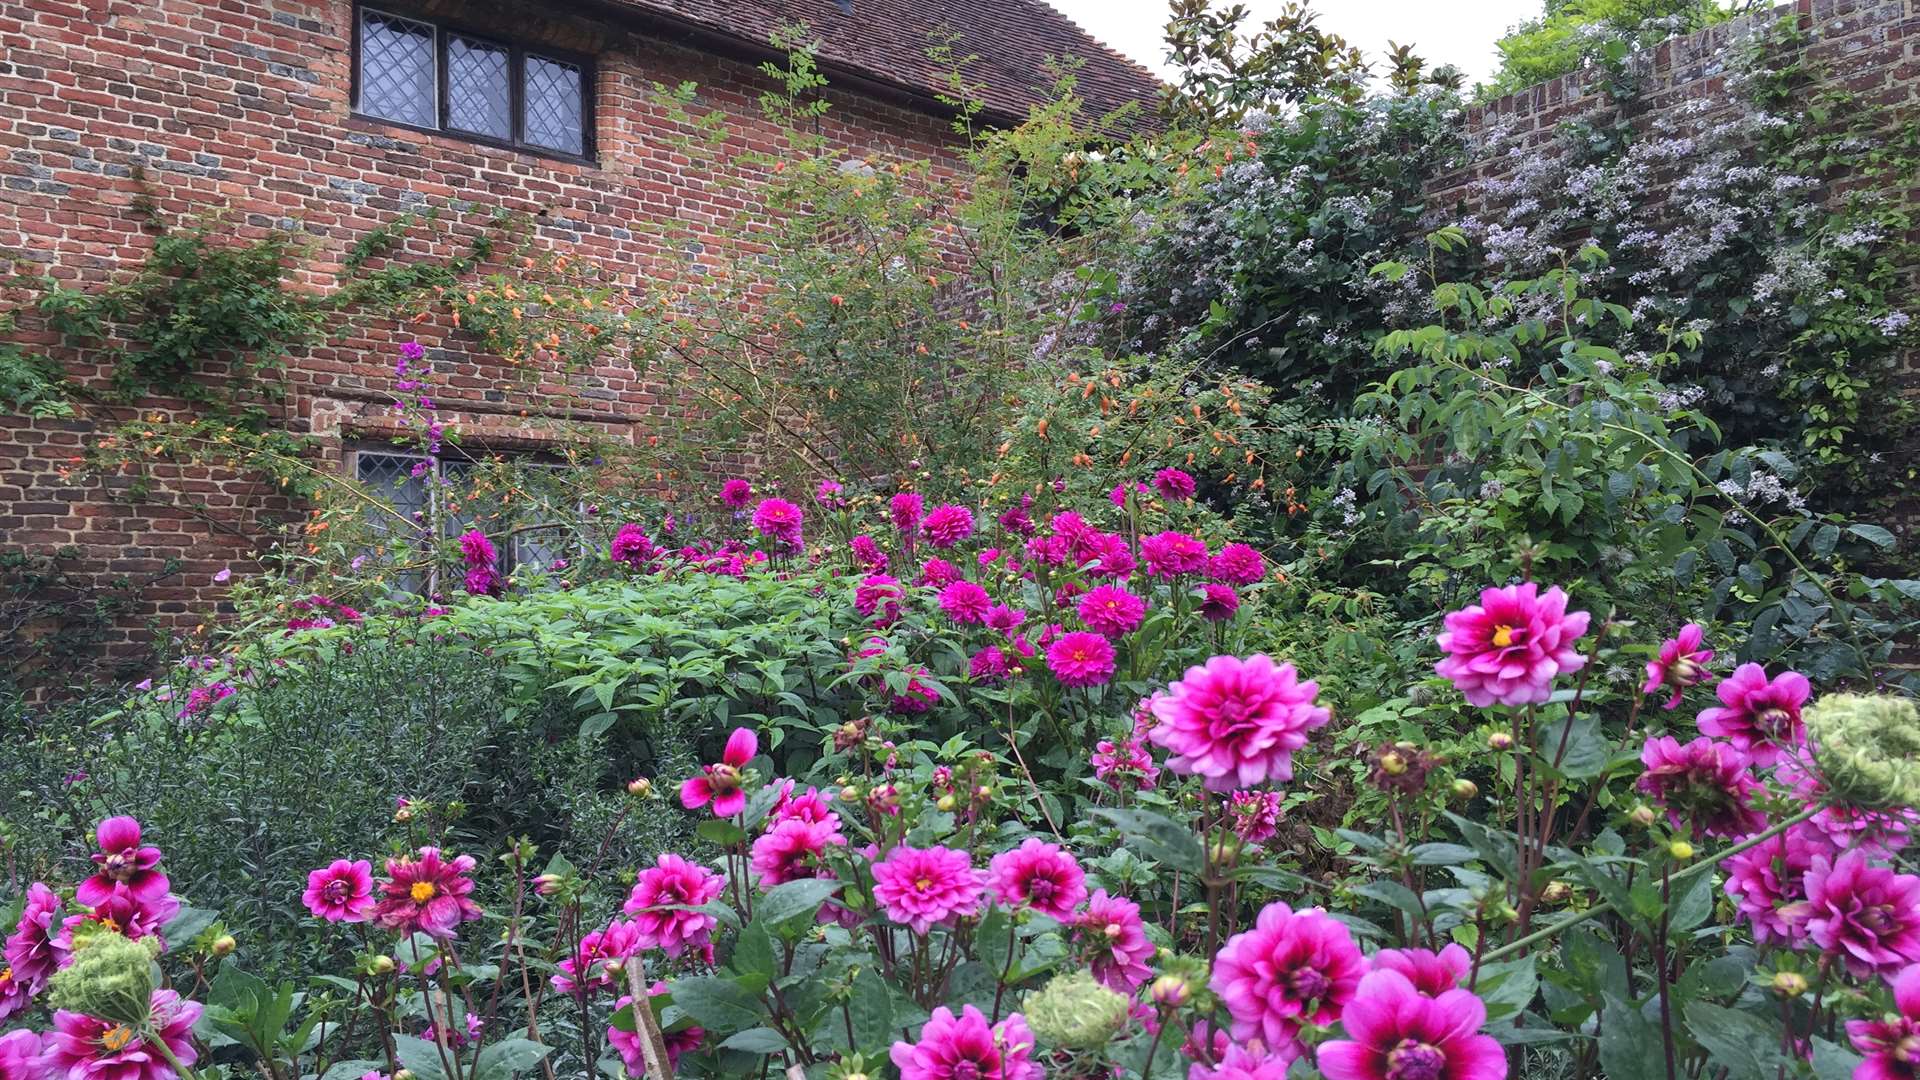 Dahlias add a splash of late summer colour to the garden